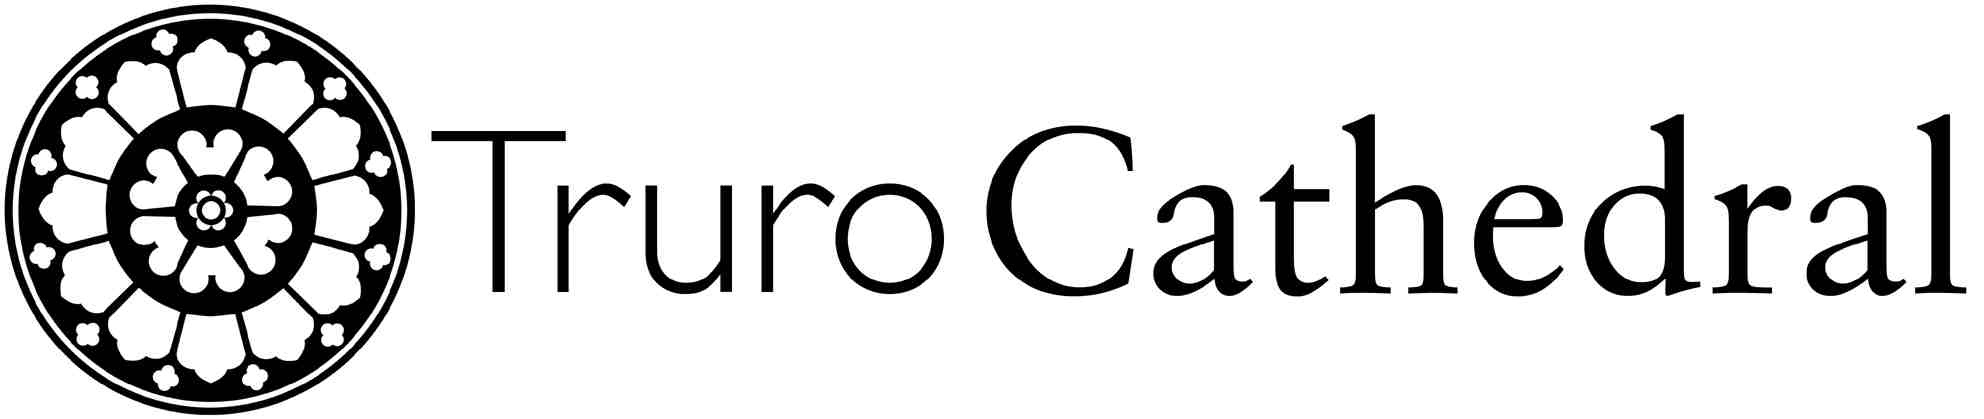 Truro Cathedral logo.jpg